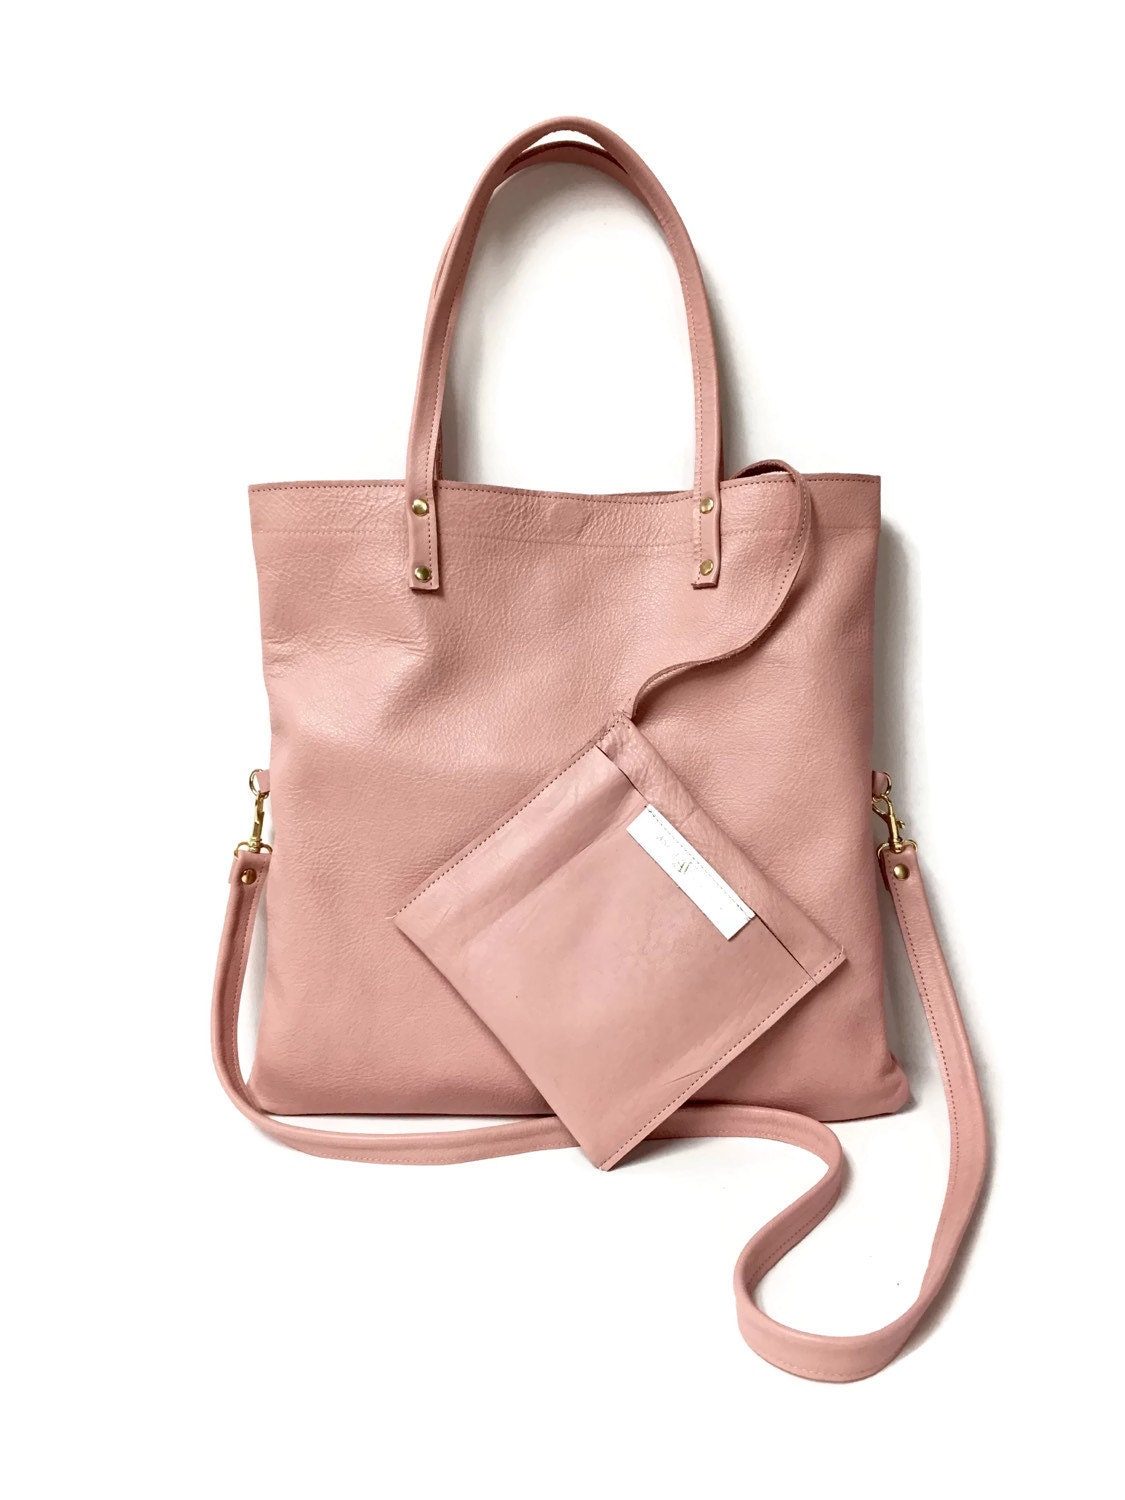 Leather tote bag in pink // minimal cross by AngelaValentineBags